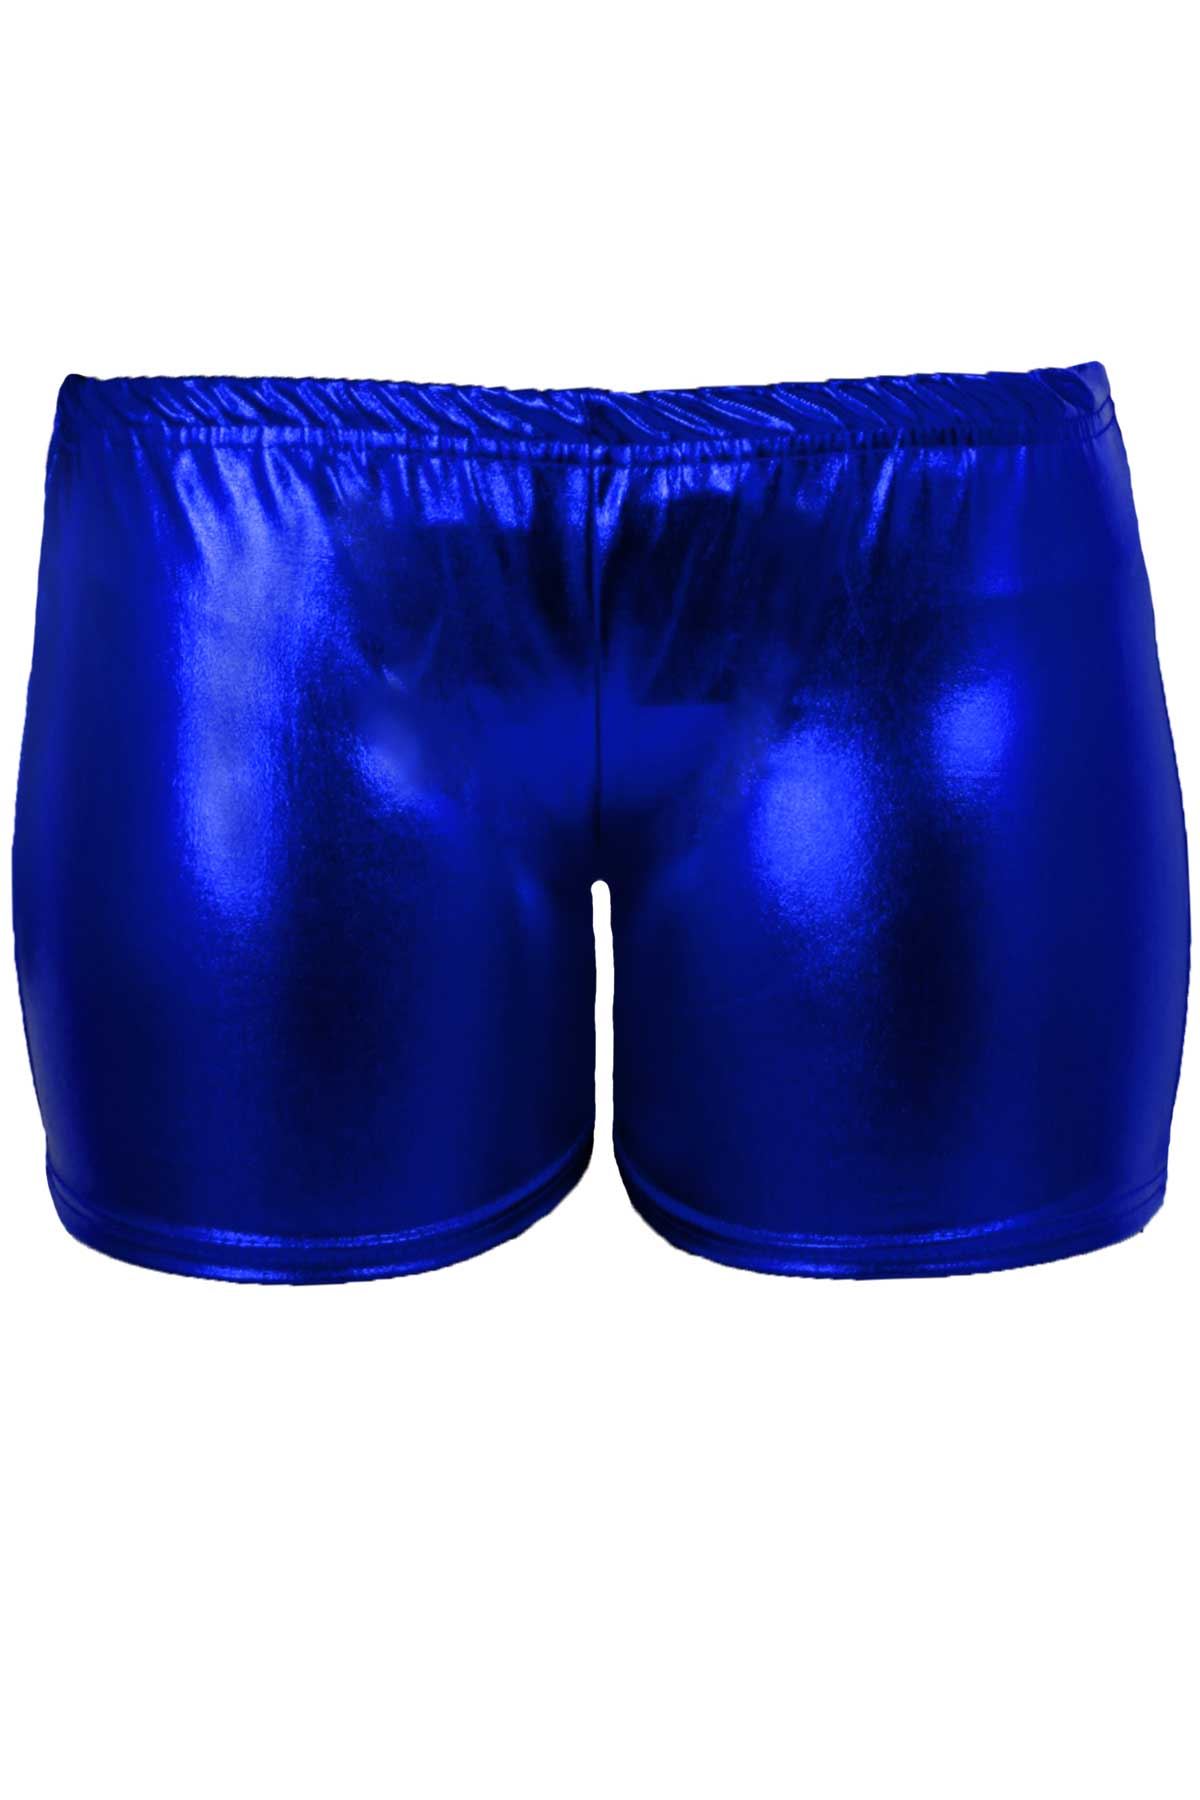 Blue Shorts Hot Pants - Costume Wonderland